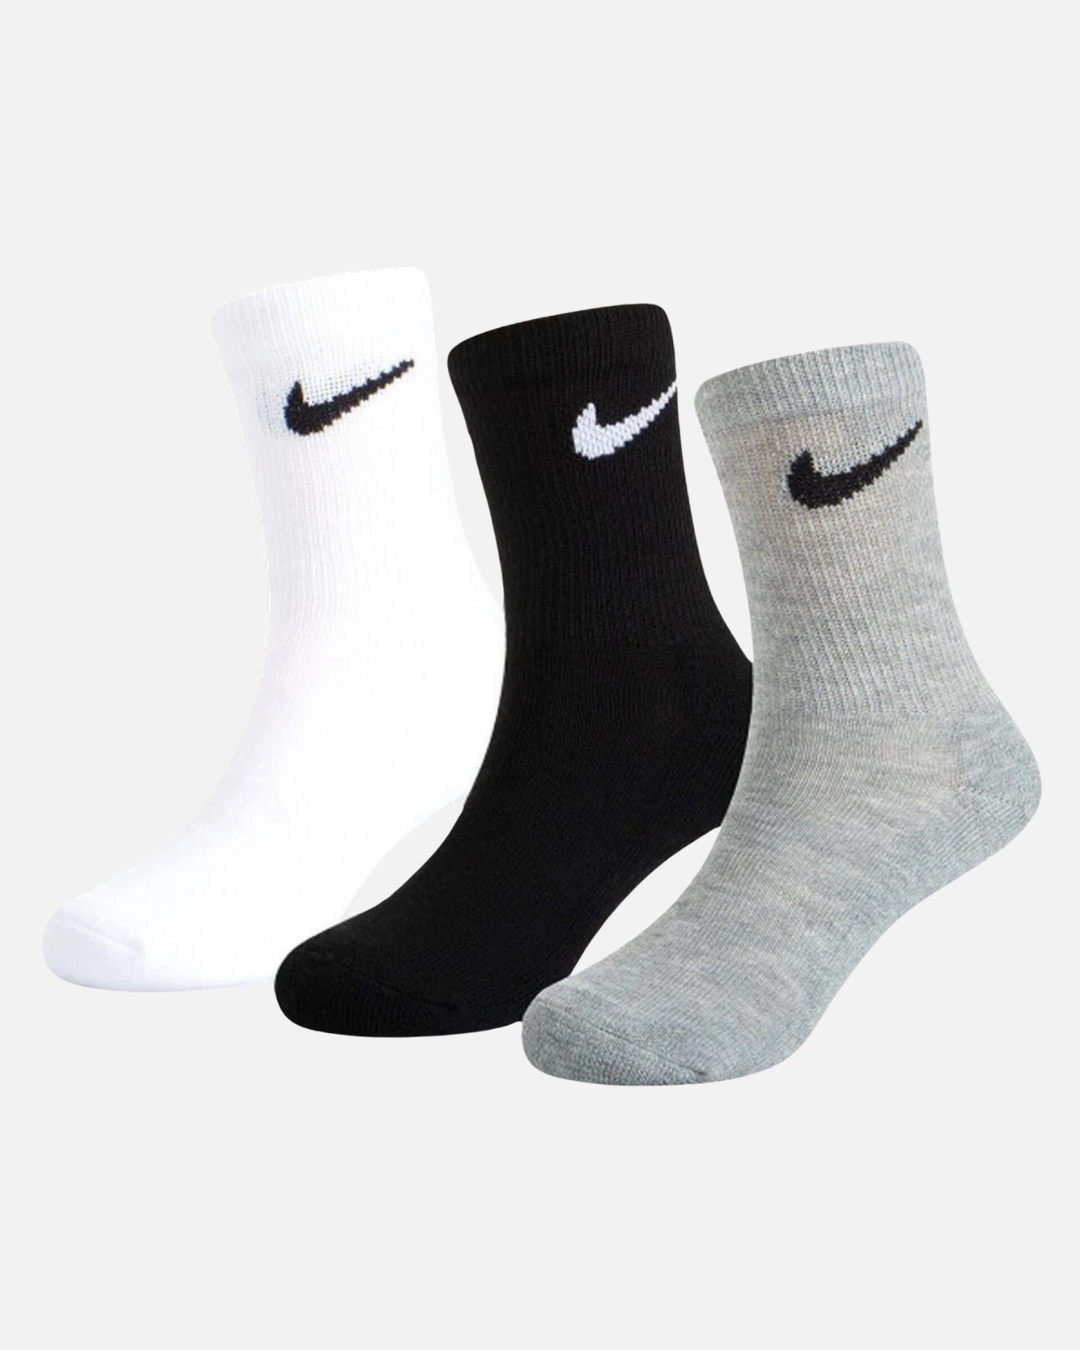 Pack 3 pairs of Nike socks - Black/Grey/White